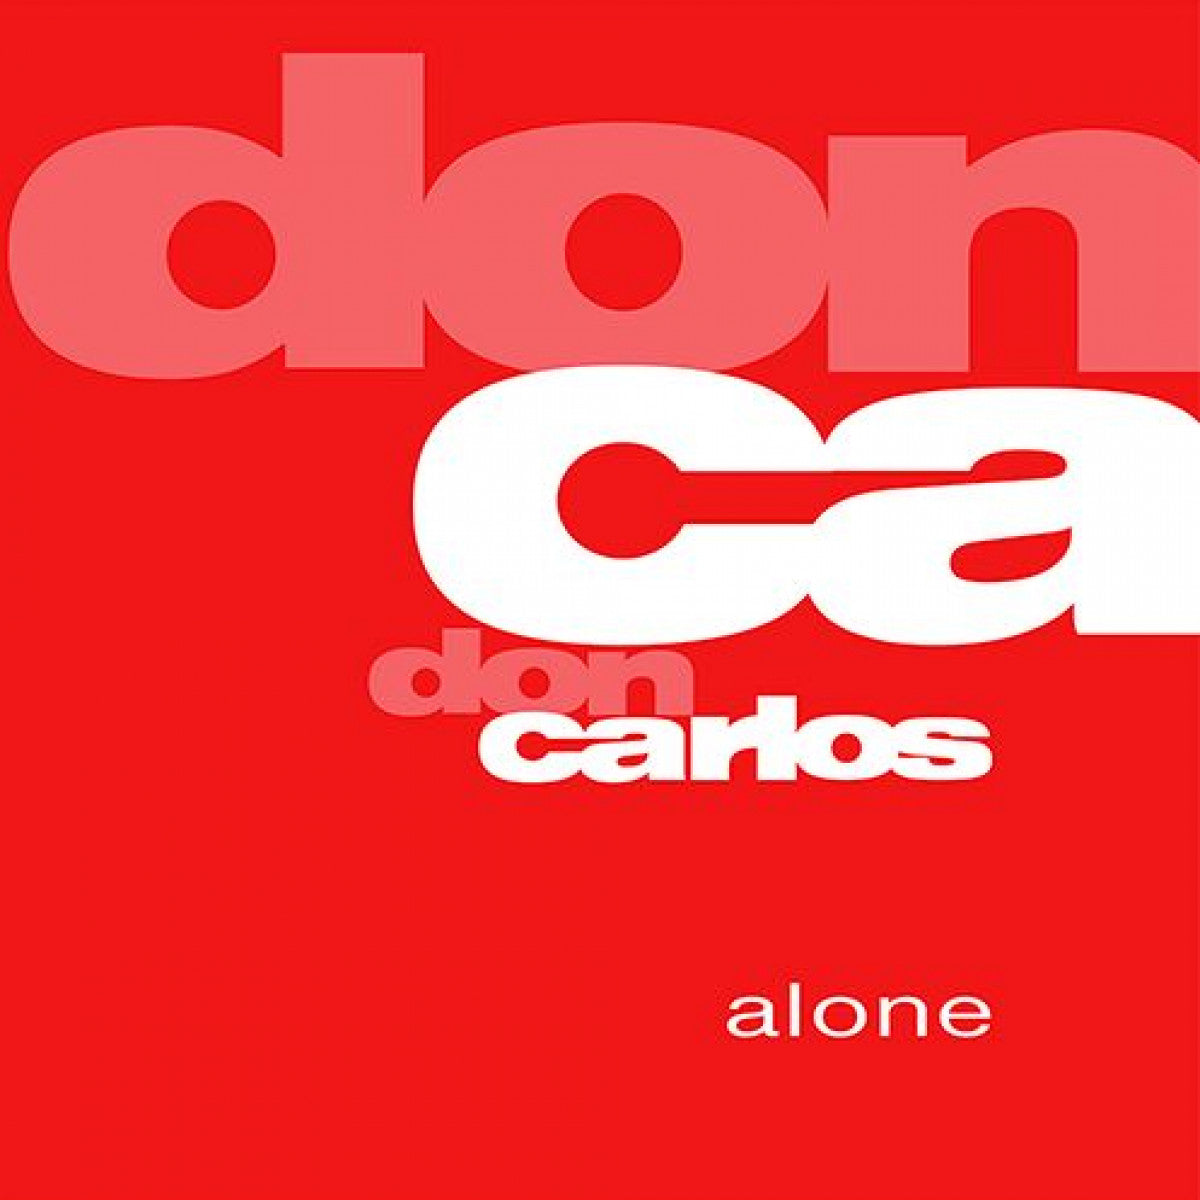 DON CARLOS / ALONE